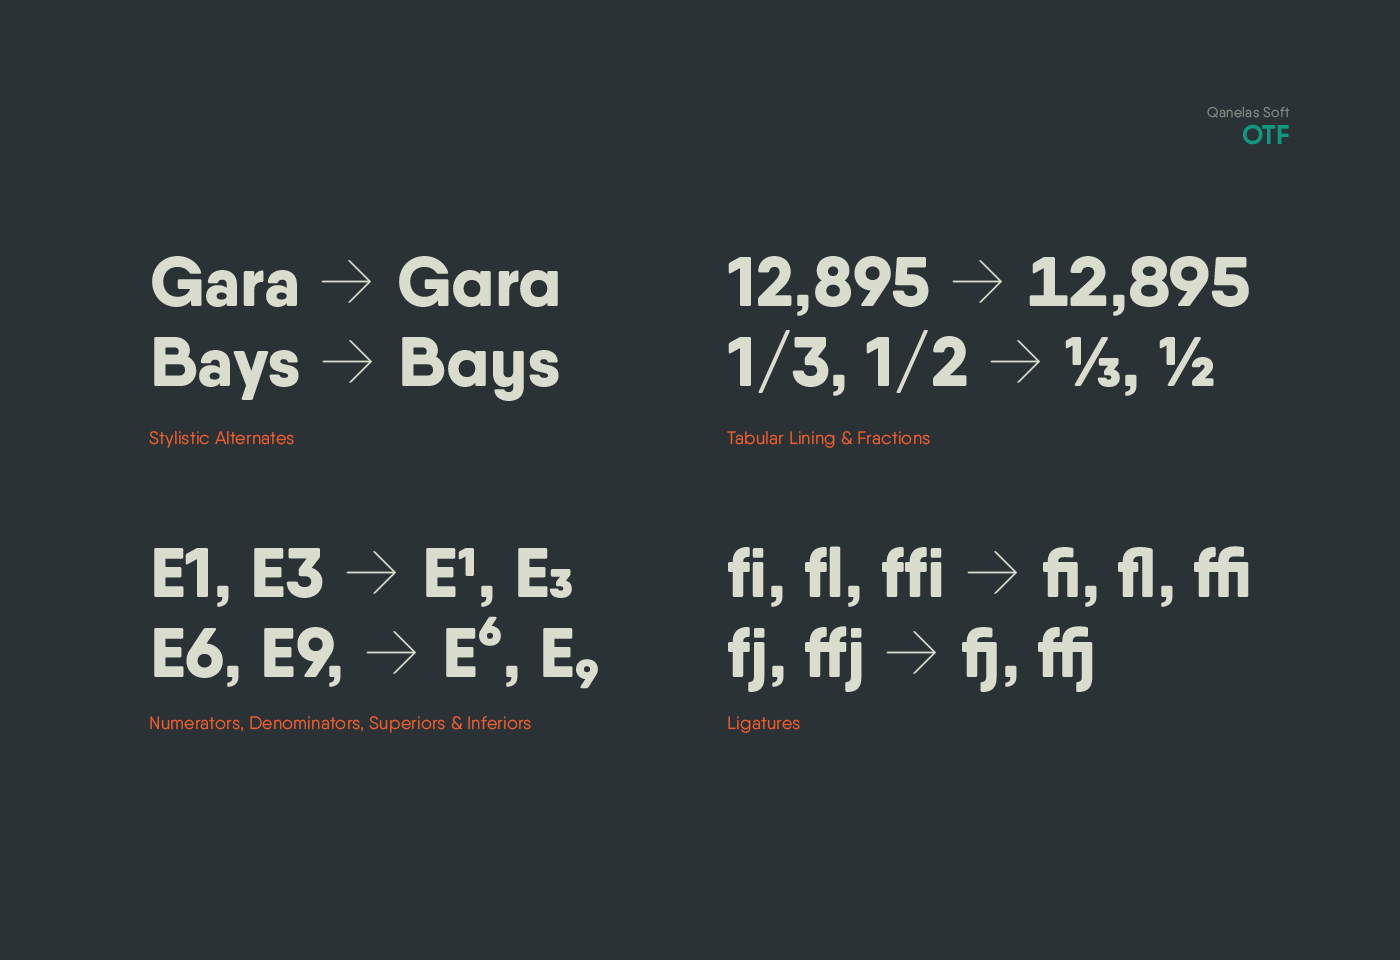 Qanelas Soft: 3 Free font weights